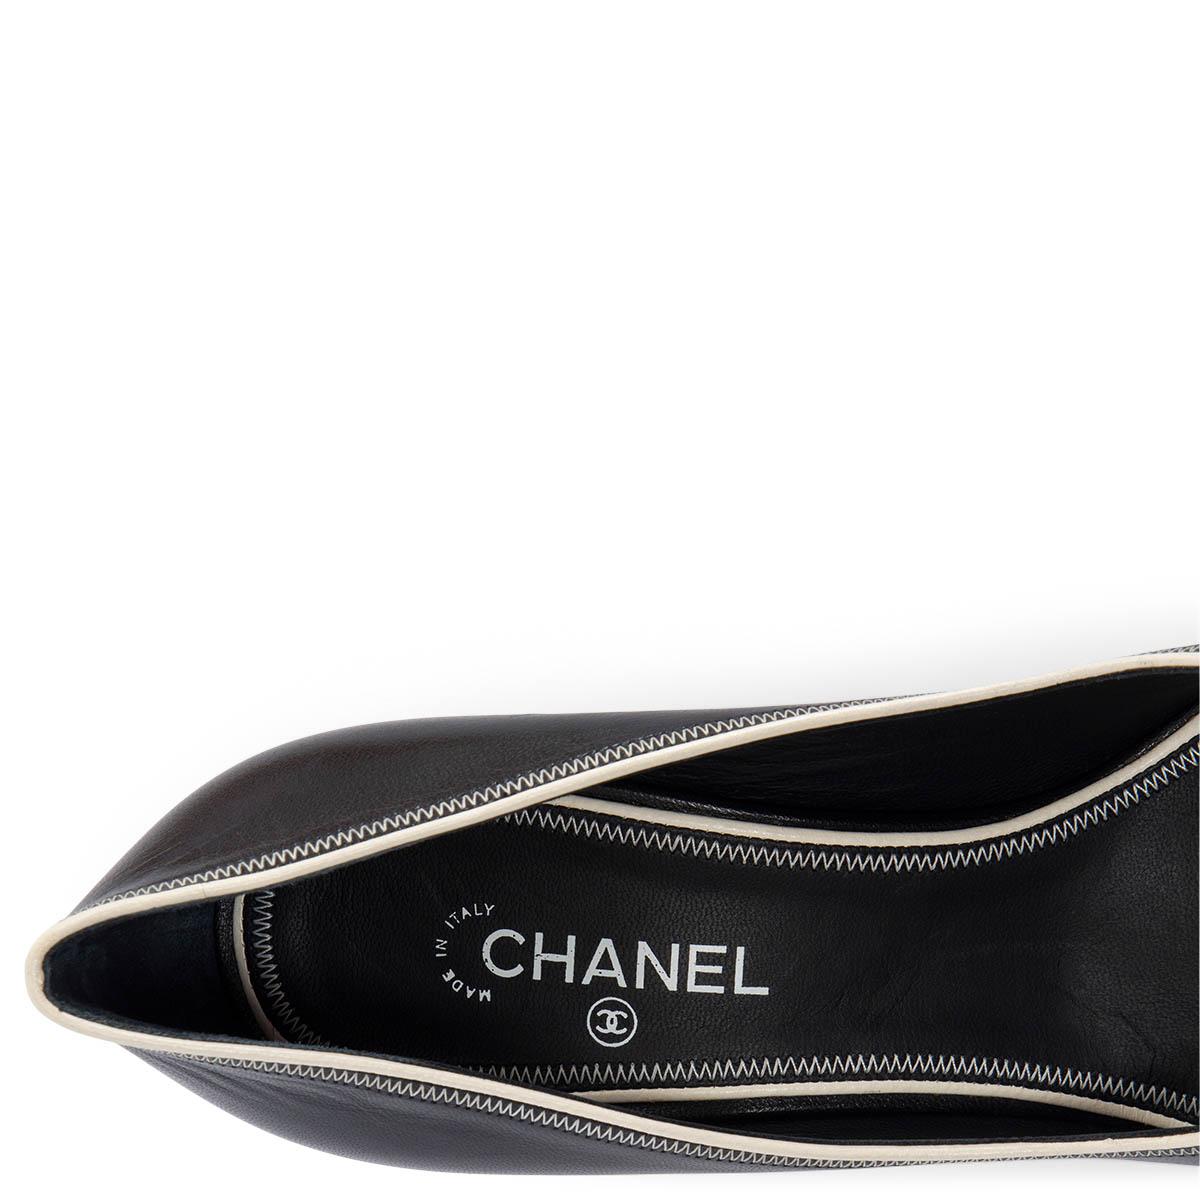 CHANEL black leather WHITE CONTRAST TRIM Round Toe Pumps Shoes 36 1